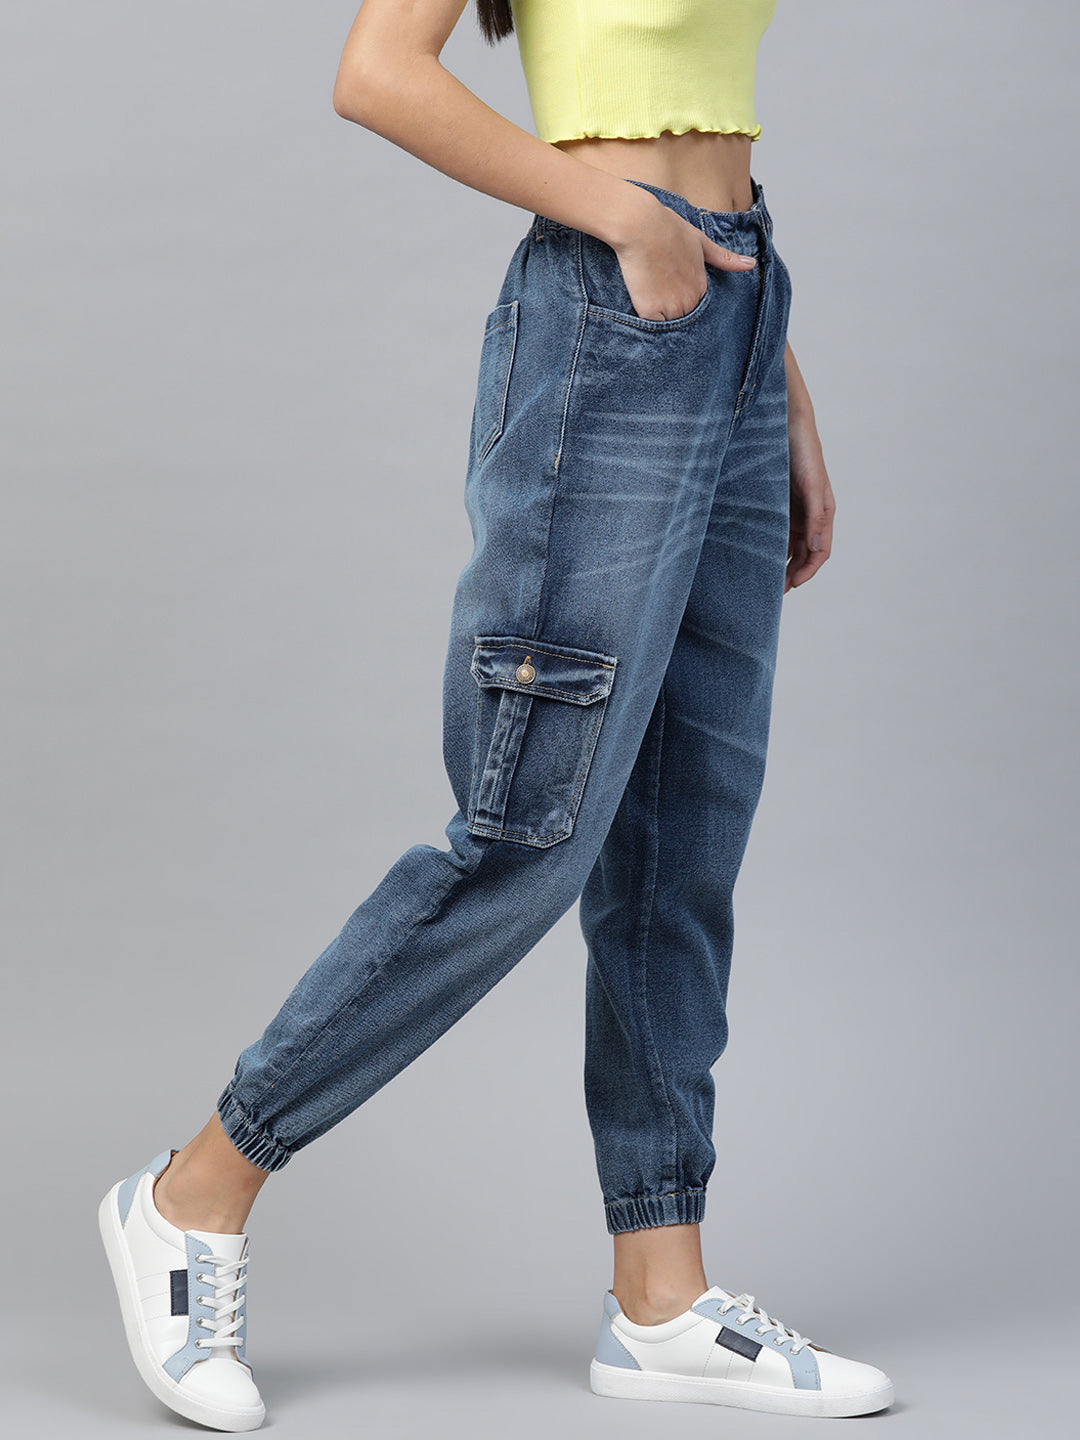 Buy SHAIRA FASHION Denim Jogger Jeans for Women Ankle